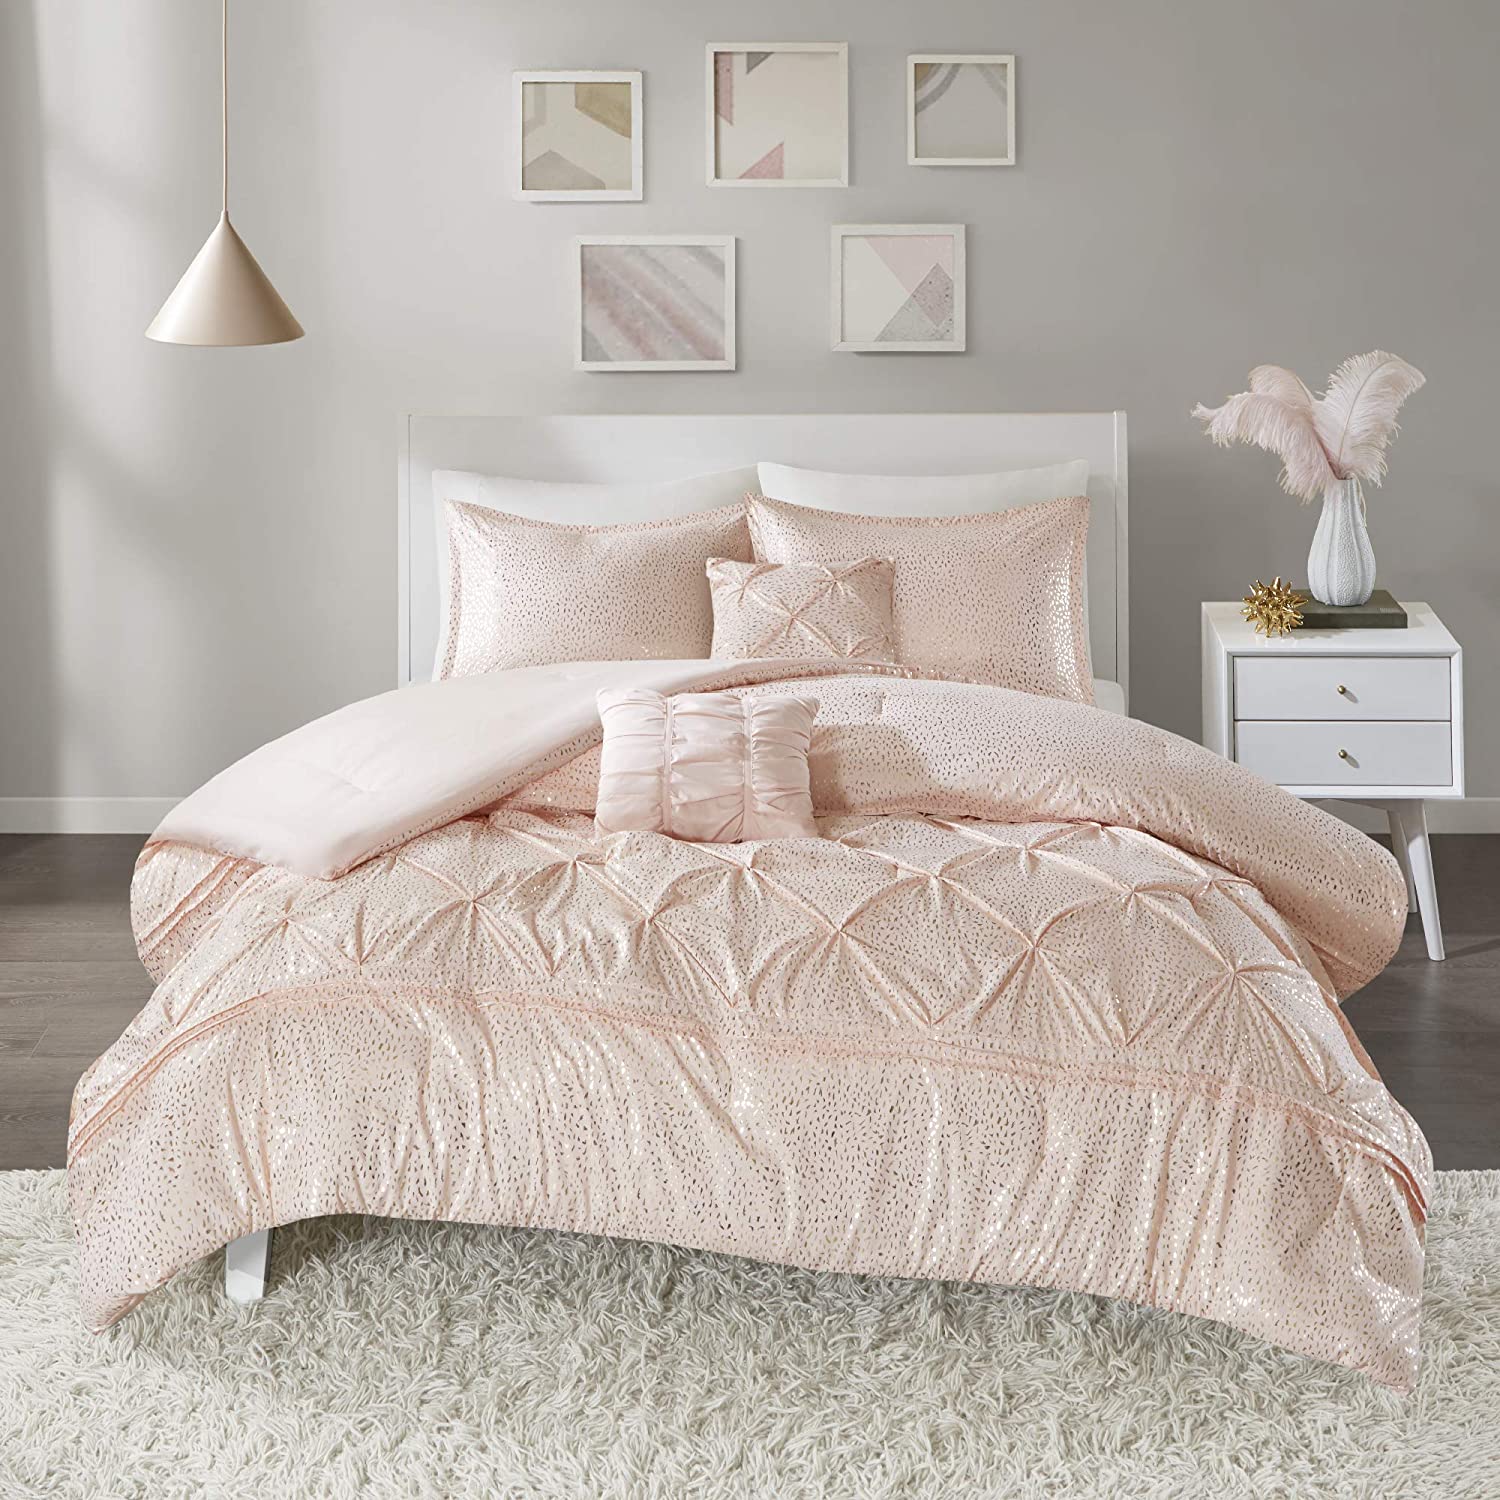 Intelligent Design - ID10-1342 Adele Ultra Soft Microfiber Metallic Print Bed Comforter Set Full/Queen Size, Blush, Gold